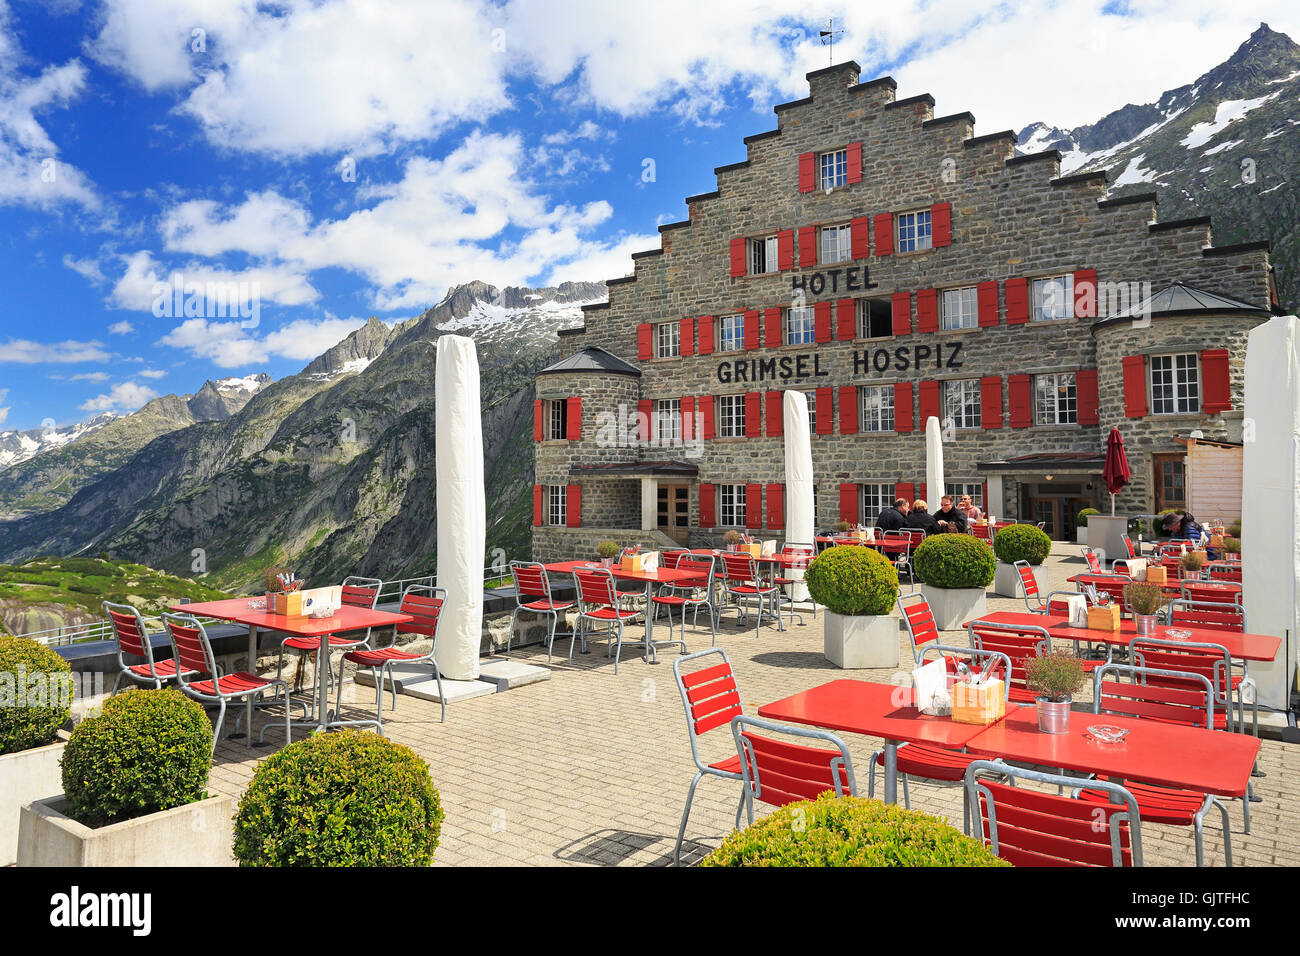 Tourists enjoying lunch on Grimsel Hotel terrace in Switzerland Alps Stock Photo